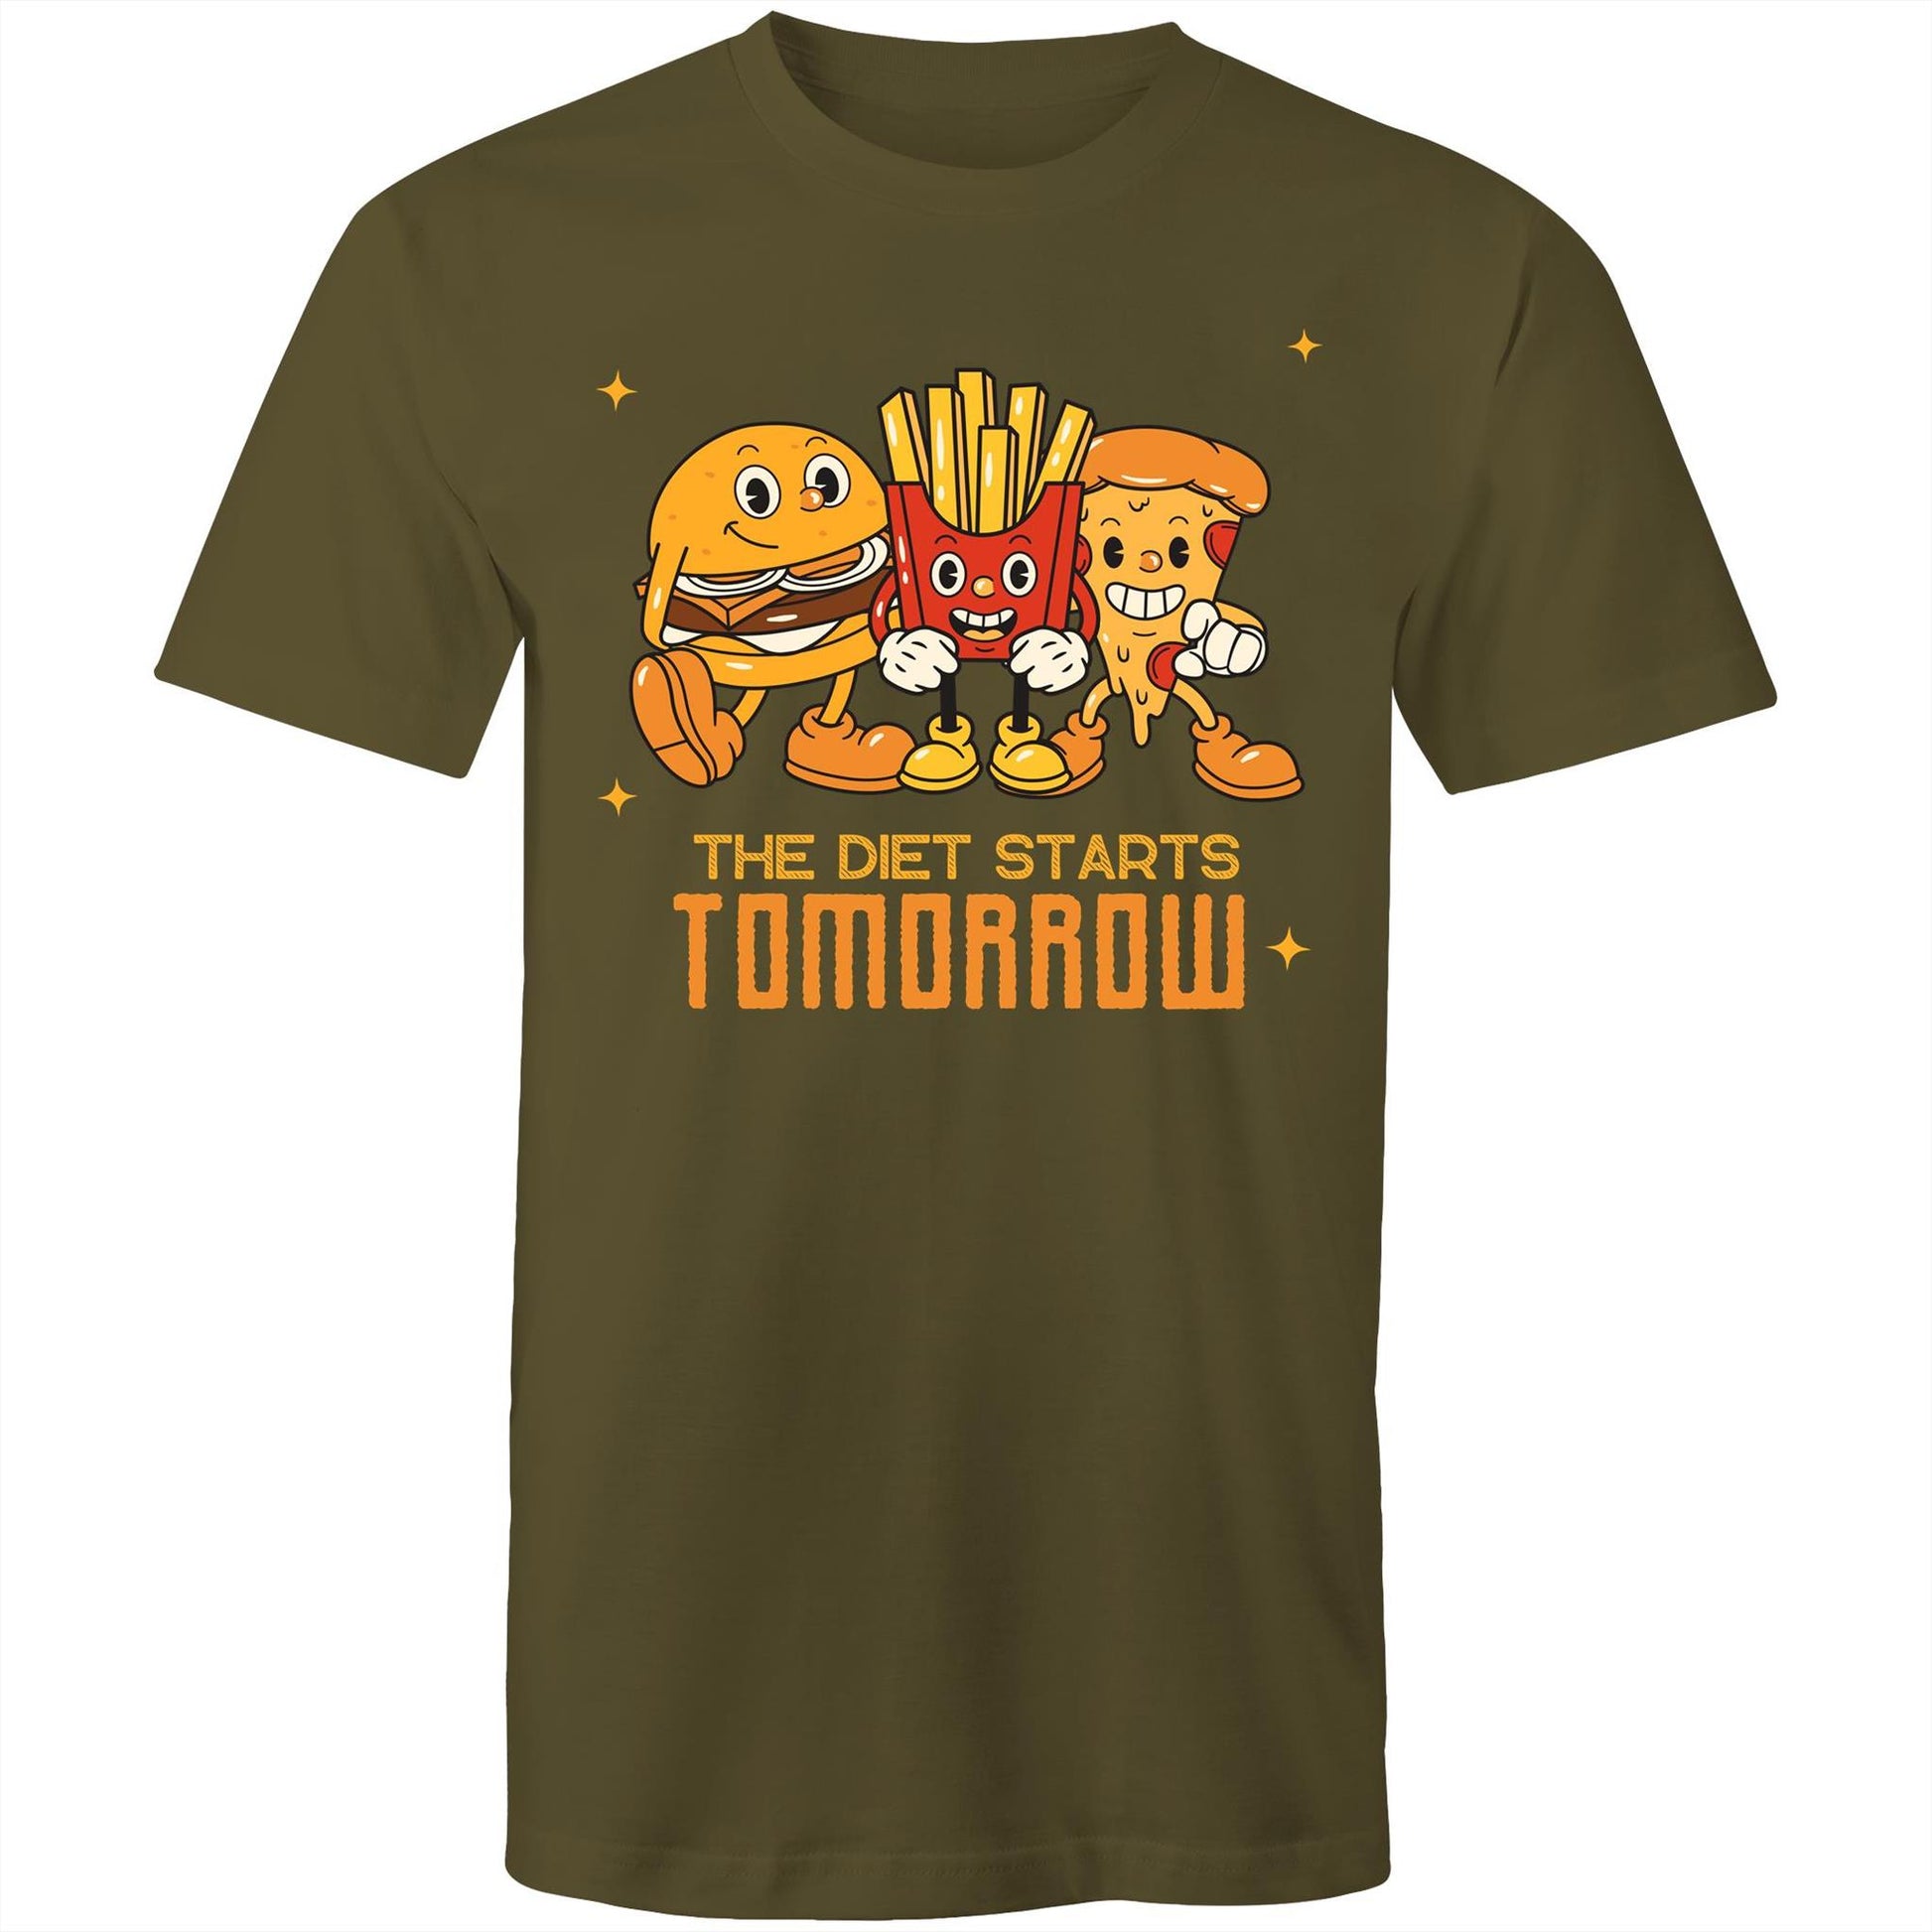 The Diet Starts Tomorrow, Hamburger, Pizza, Fries - Mens T-Shirt Army Green Mens T-shirt Food Funny Retro